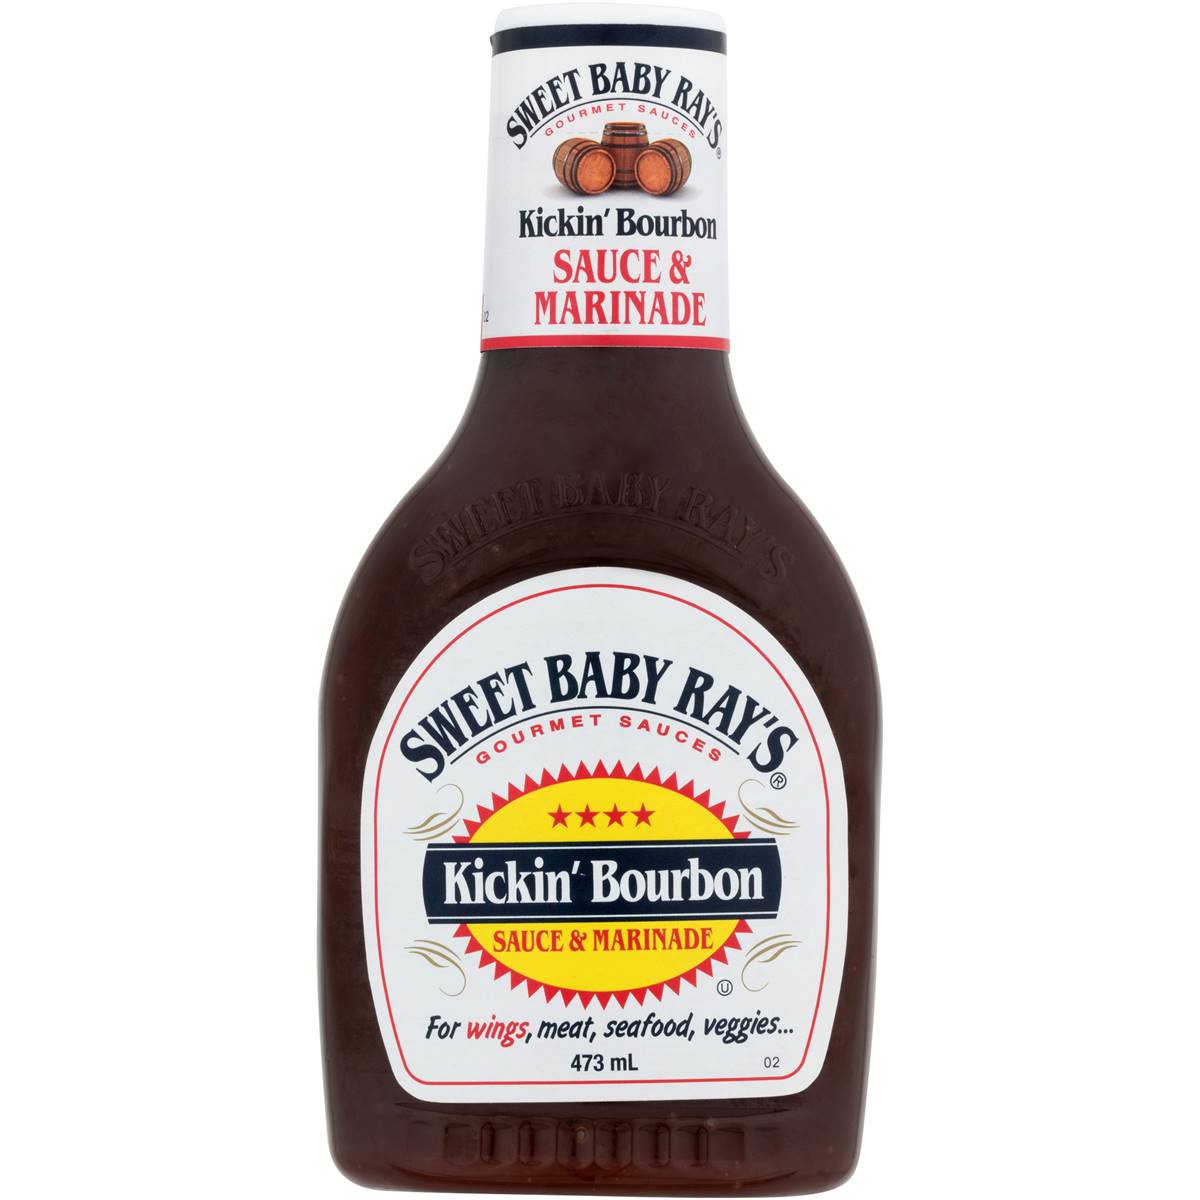 Sweet Baby Rays Kickin Bourbon Sauce & Marinade